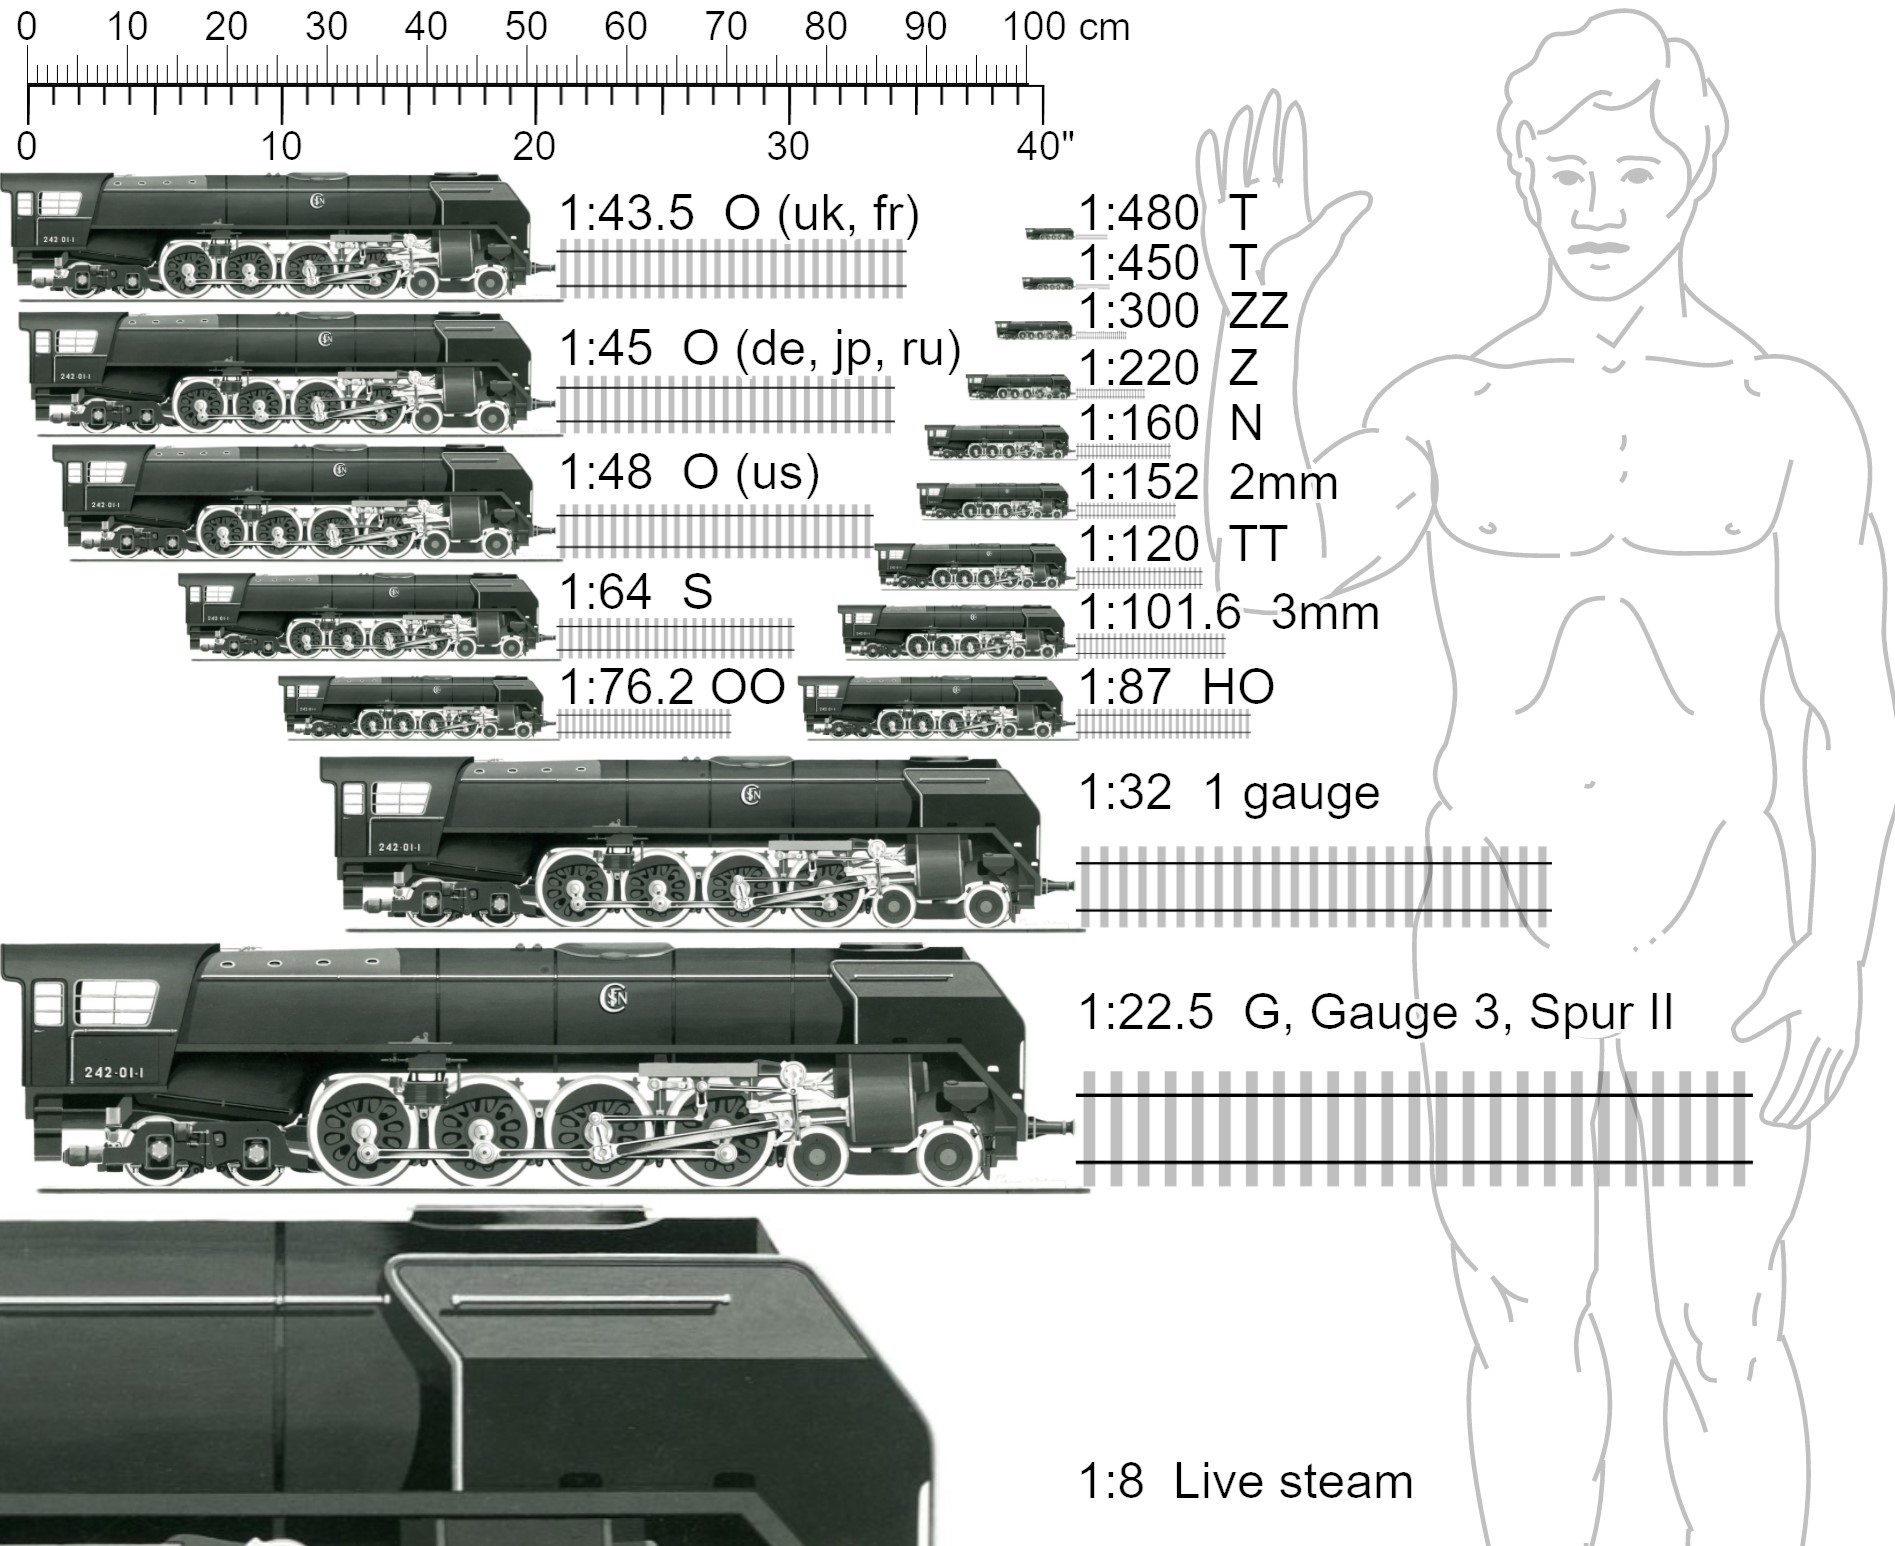 Model Train Gauges Chart